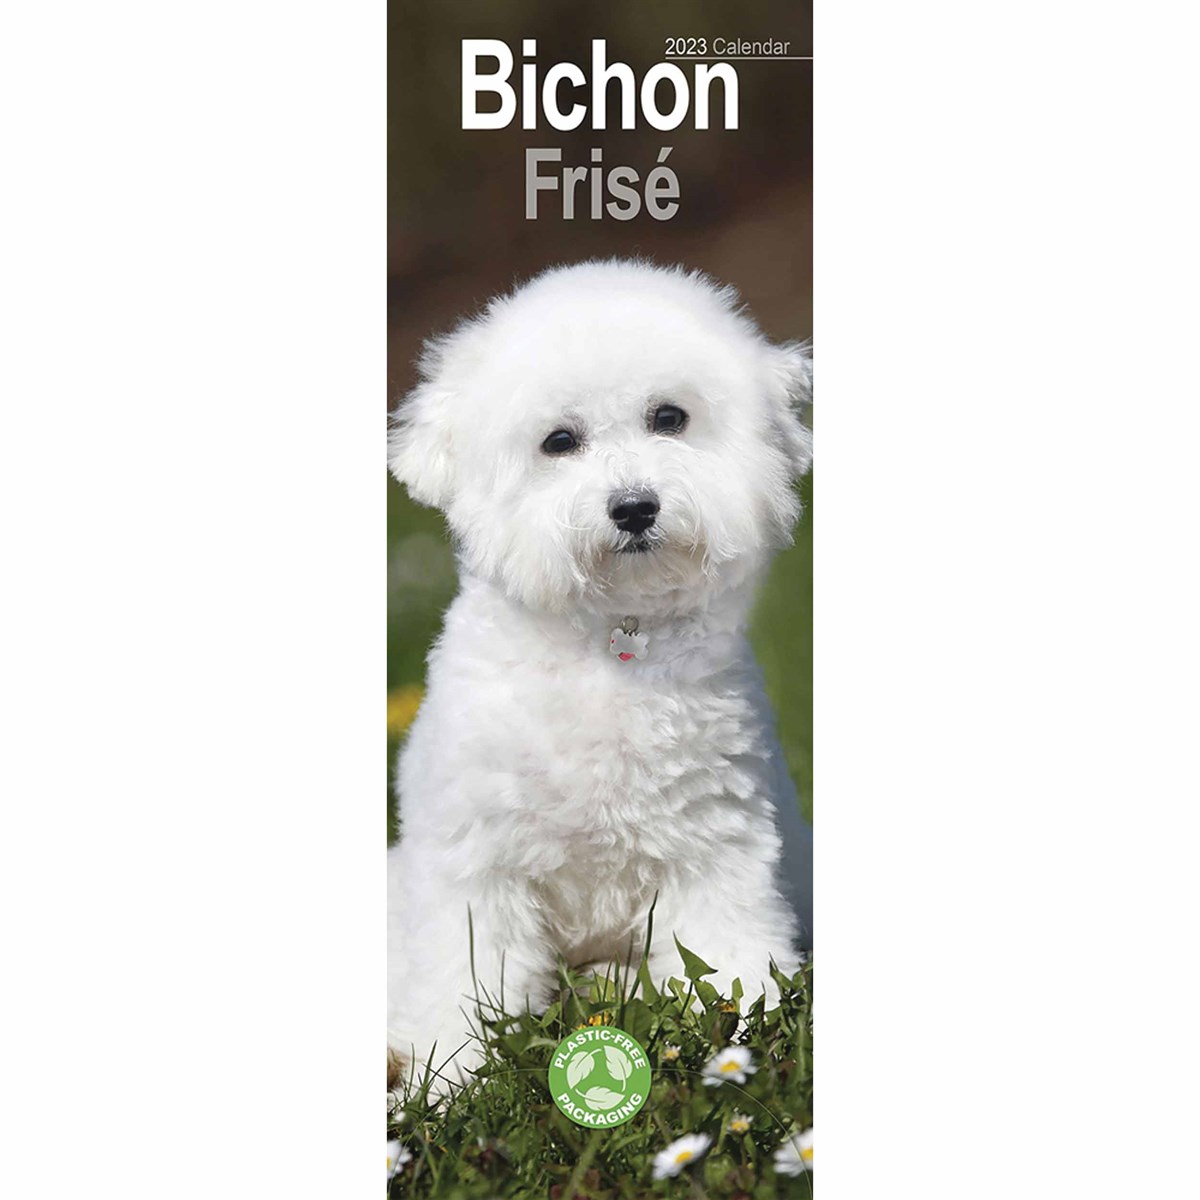 Bichon Frisé Slim 2023 Calendars